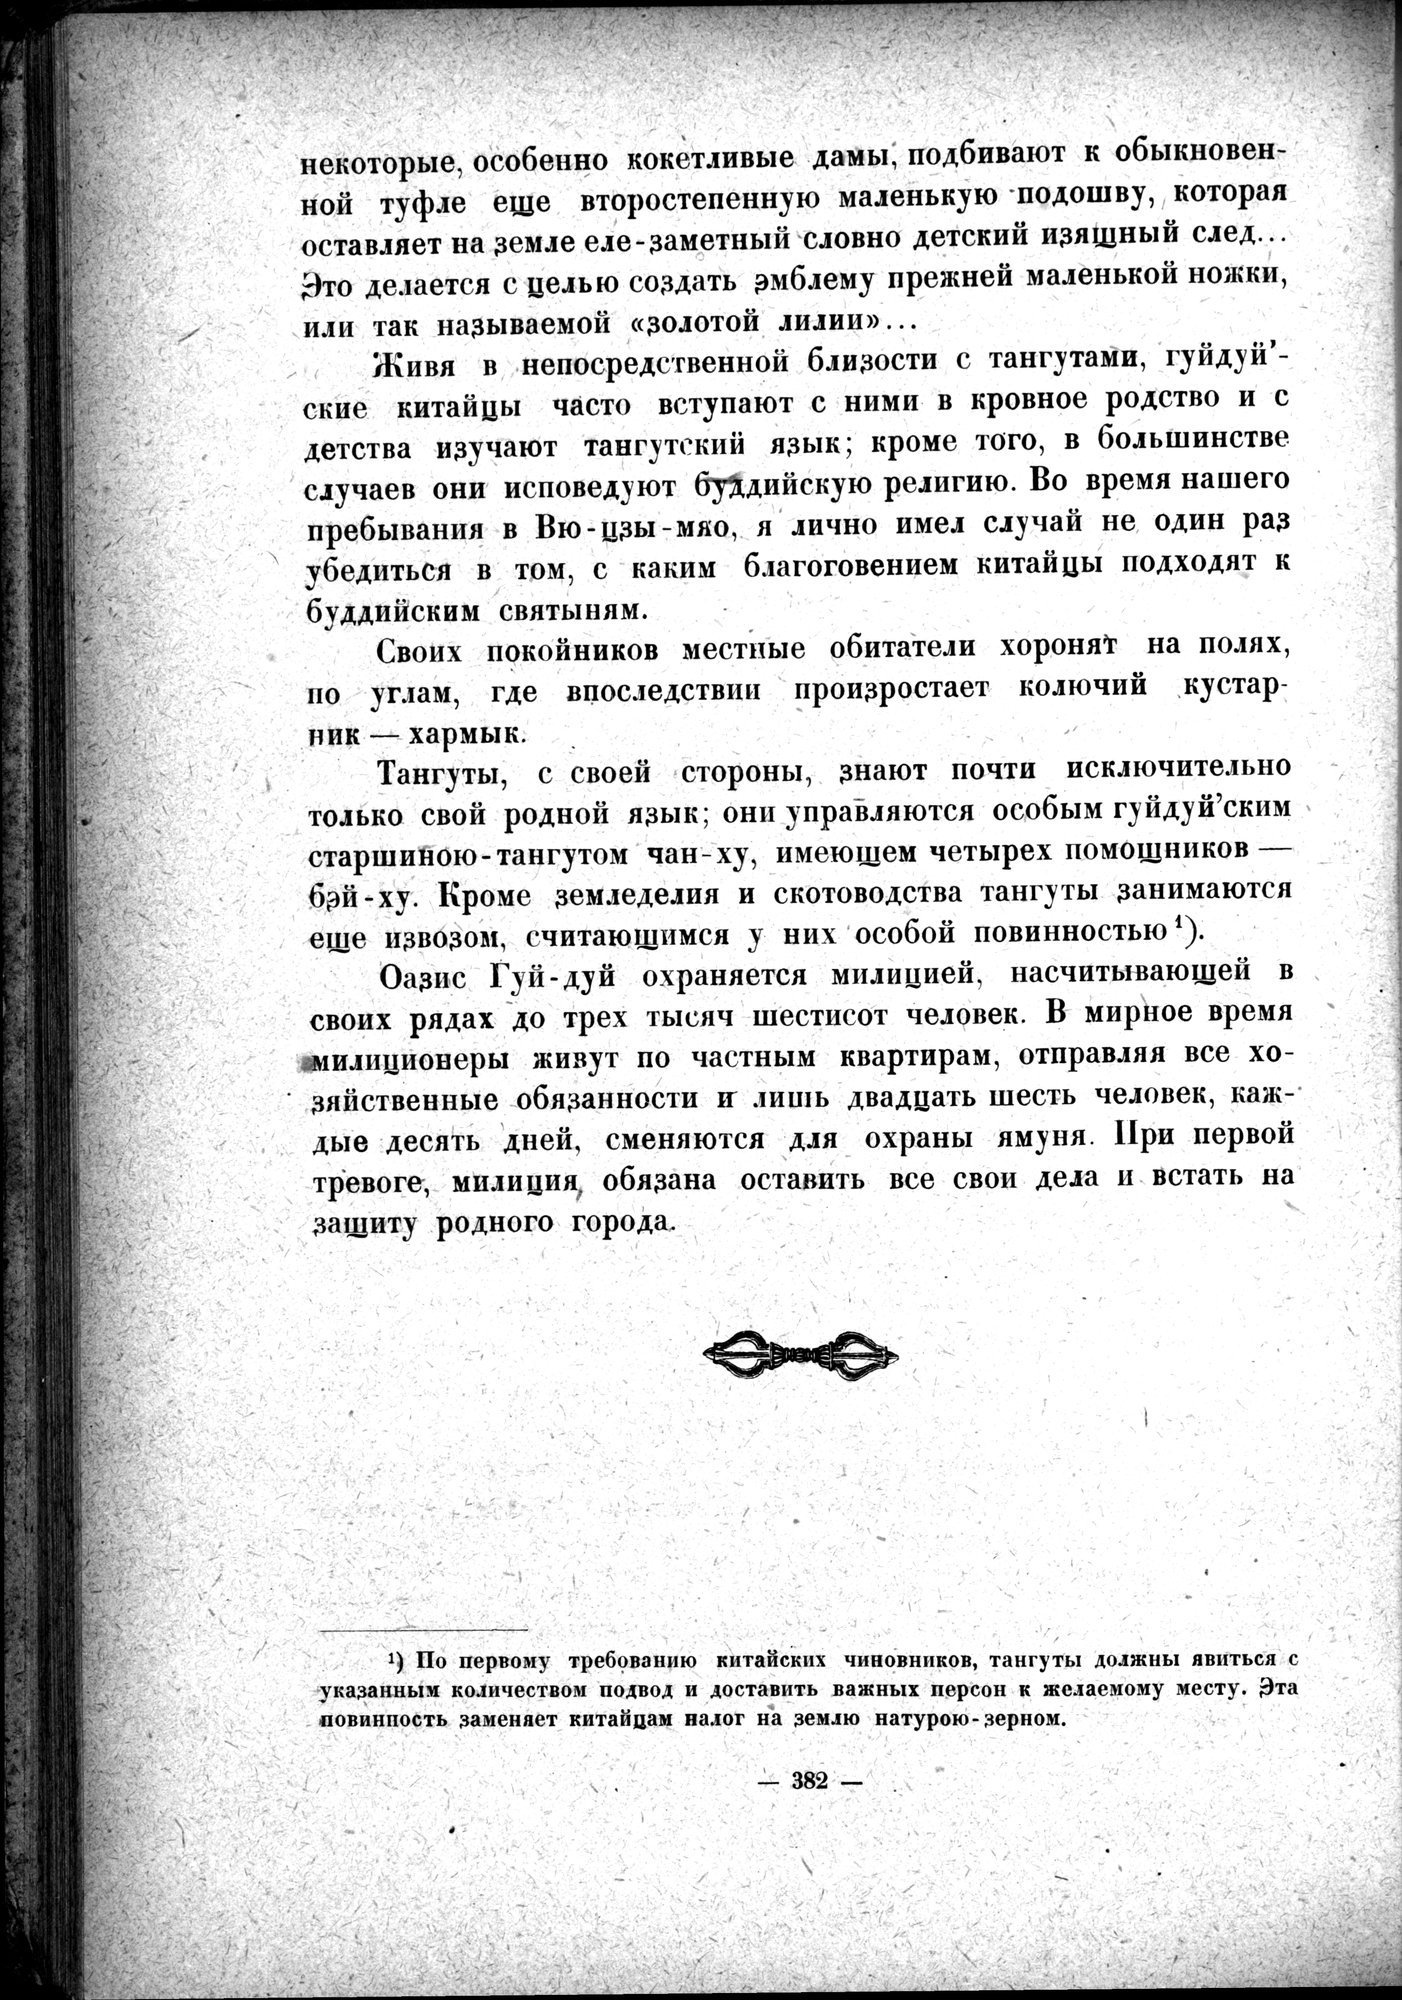 Mongoliya i Amdo i mertby gorod Khara-Khoto : vol.1 / Page 436 (Grayscale High Resolution Image)